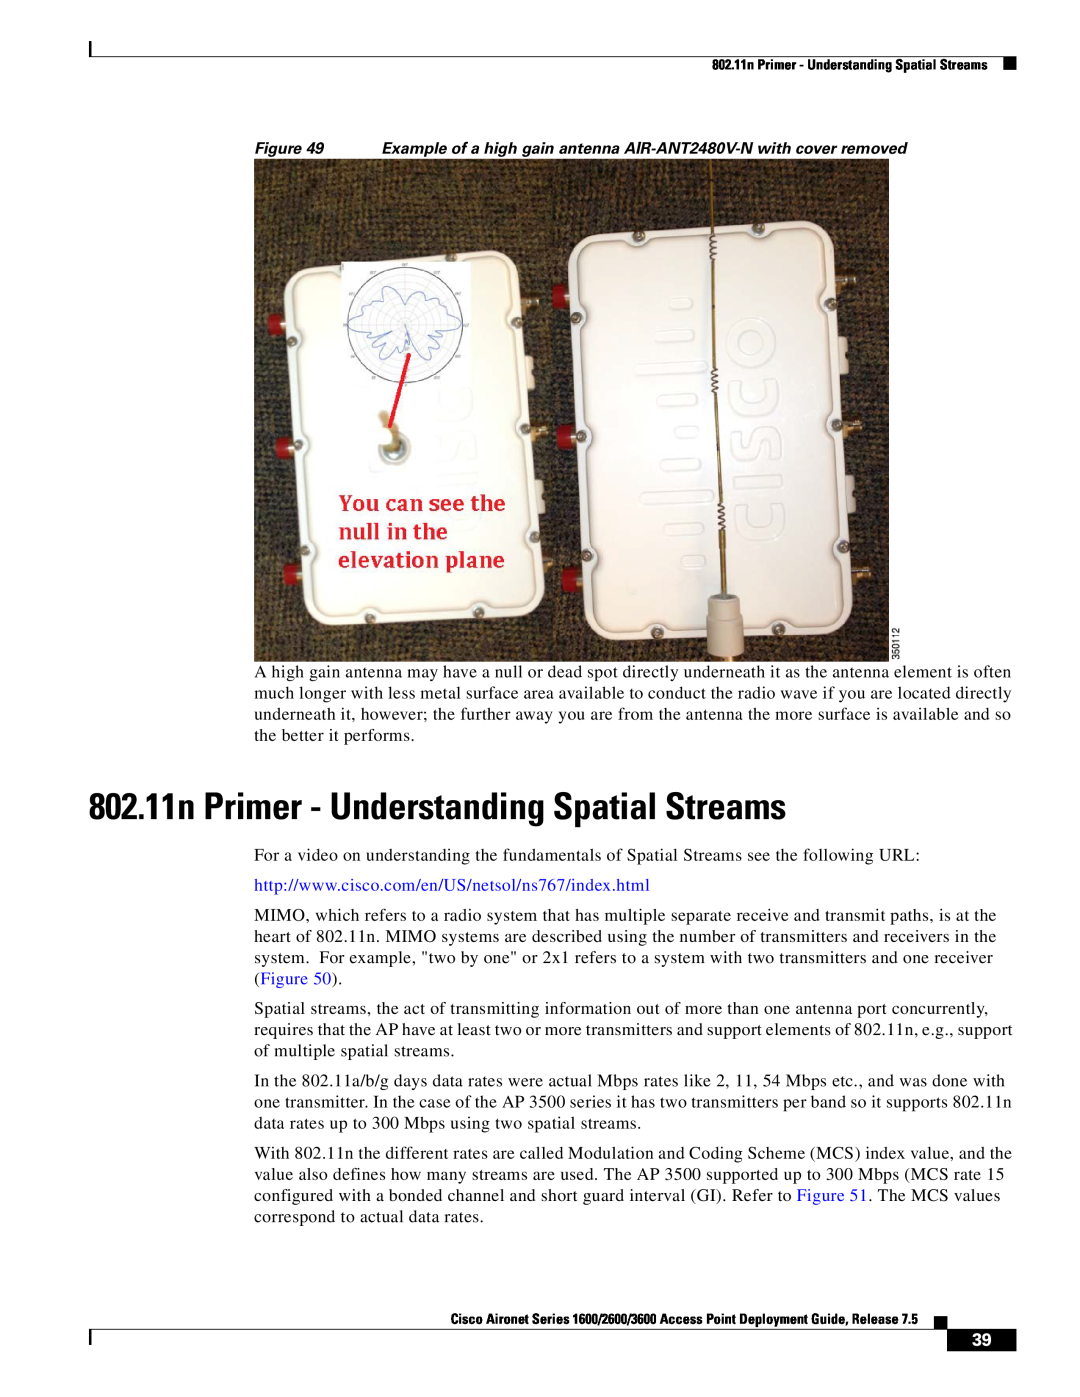 Cisco Systems AIRRM3000ACAK9 manual 802.11n Primer - Understanding Spatial Streams 